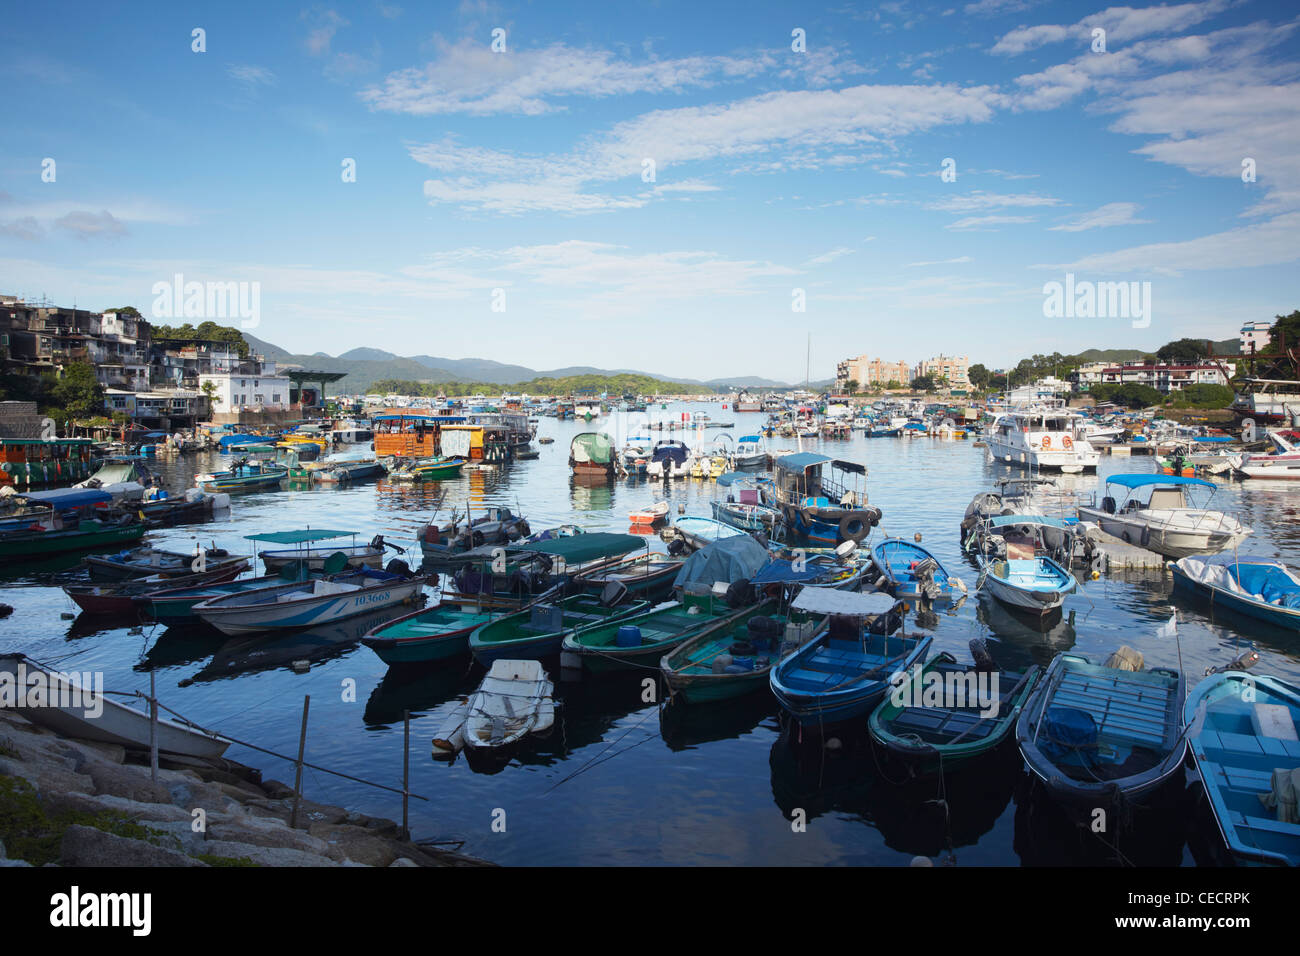 Boats in Sai Kung harbour, New Territories, Hong Kong, China Stock Photo